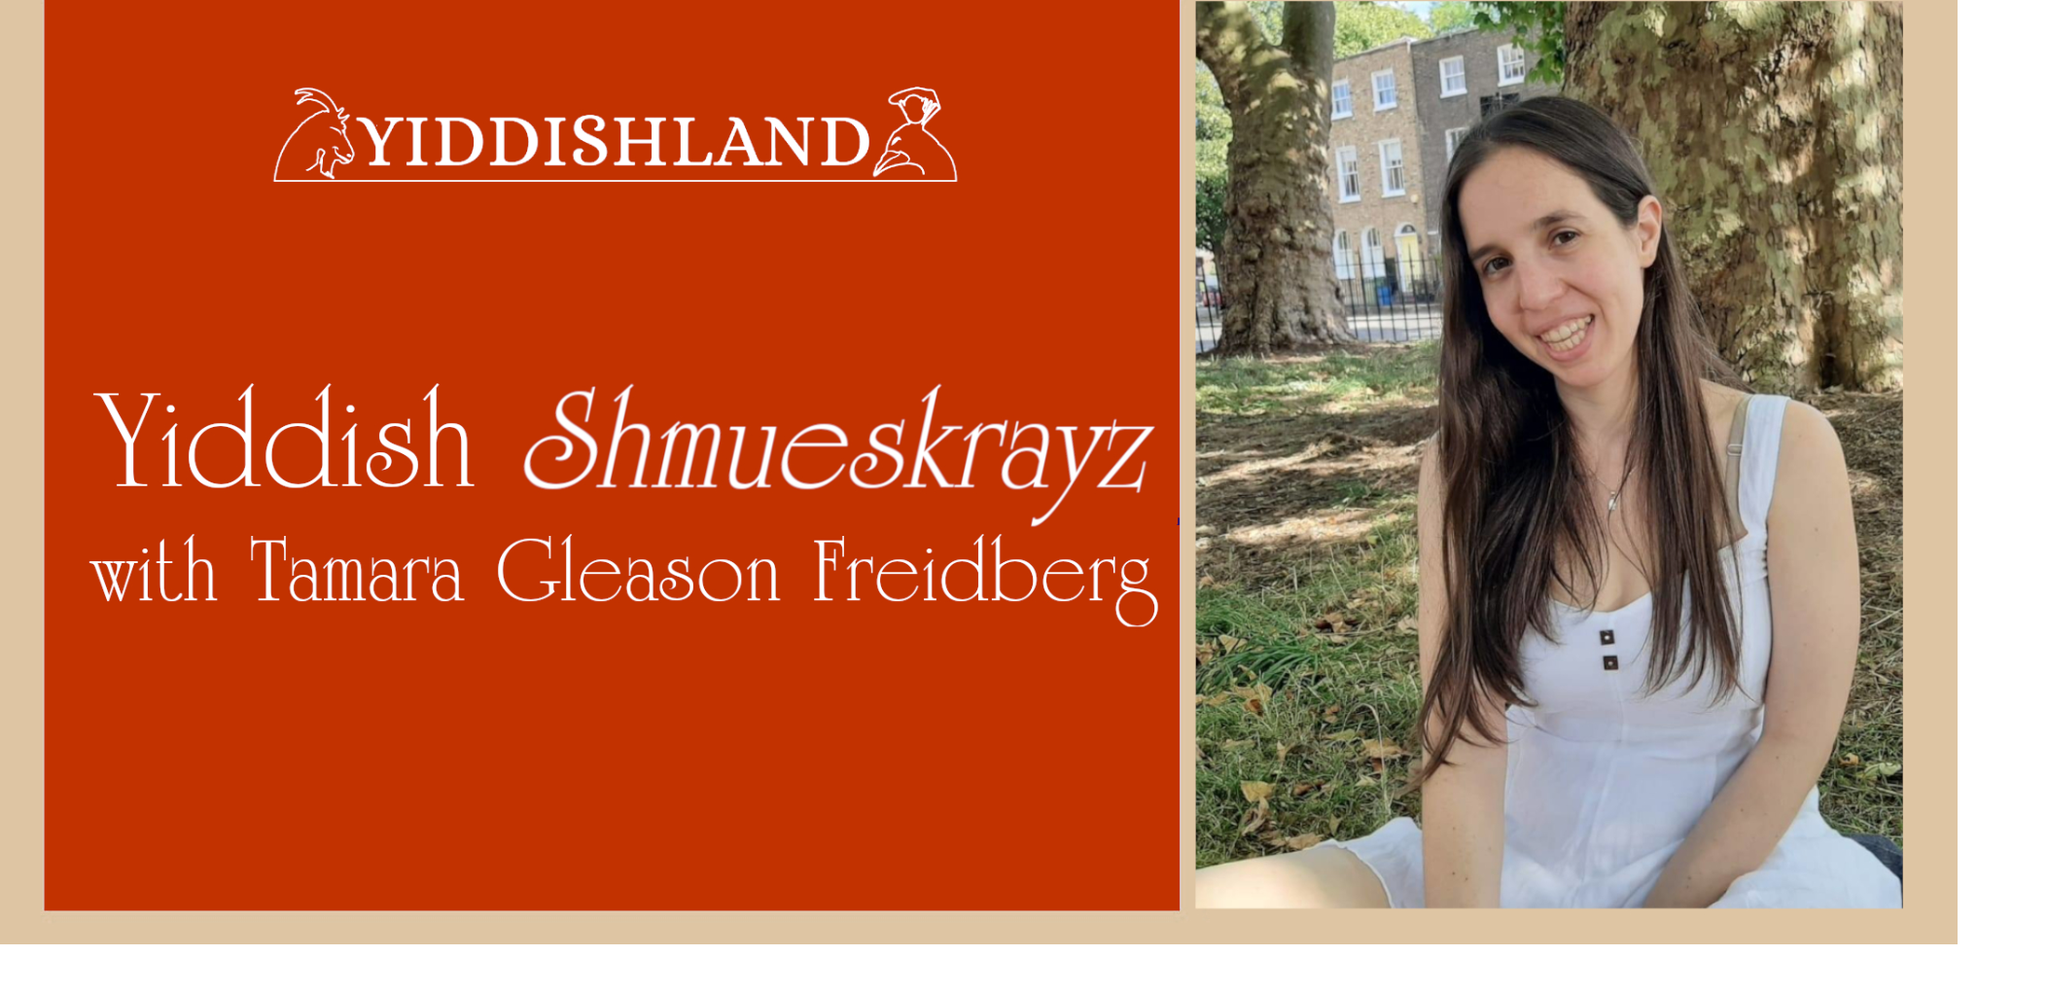  Yiddish Shmueskrayz with Tamara Gleason Freidberg banner